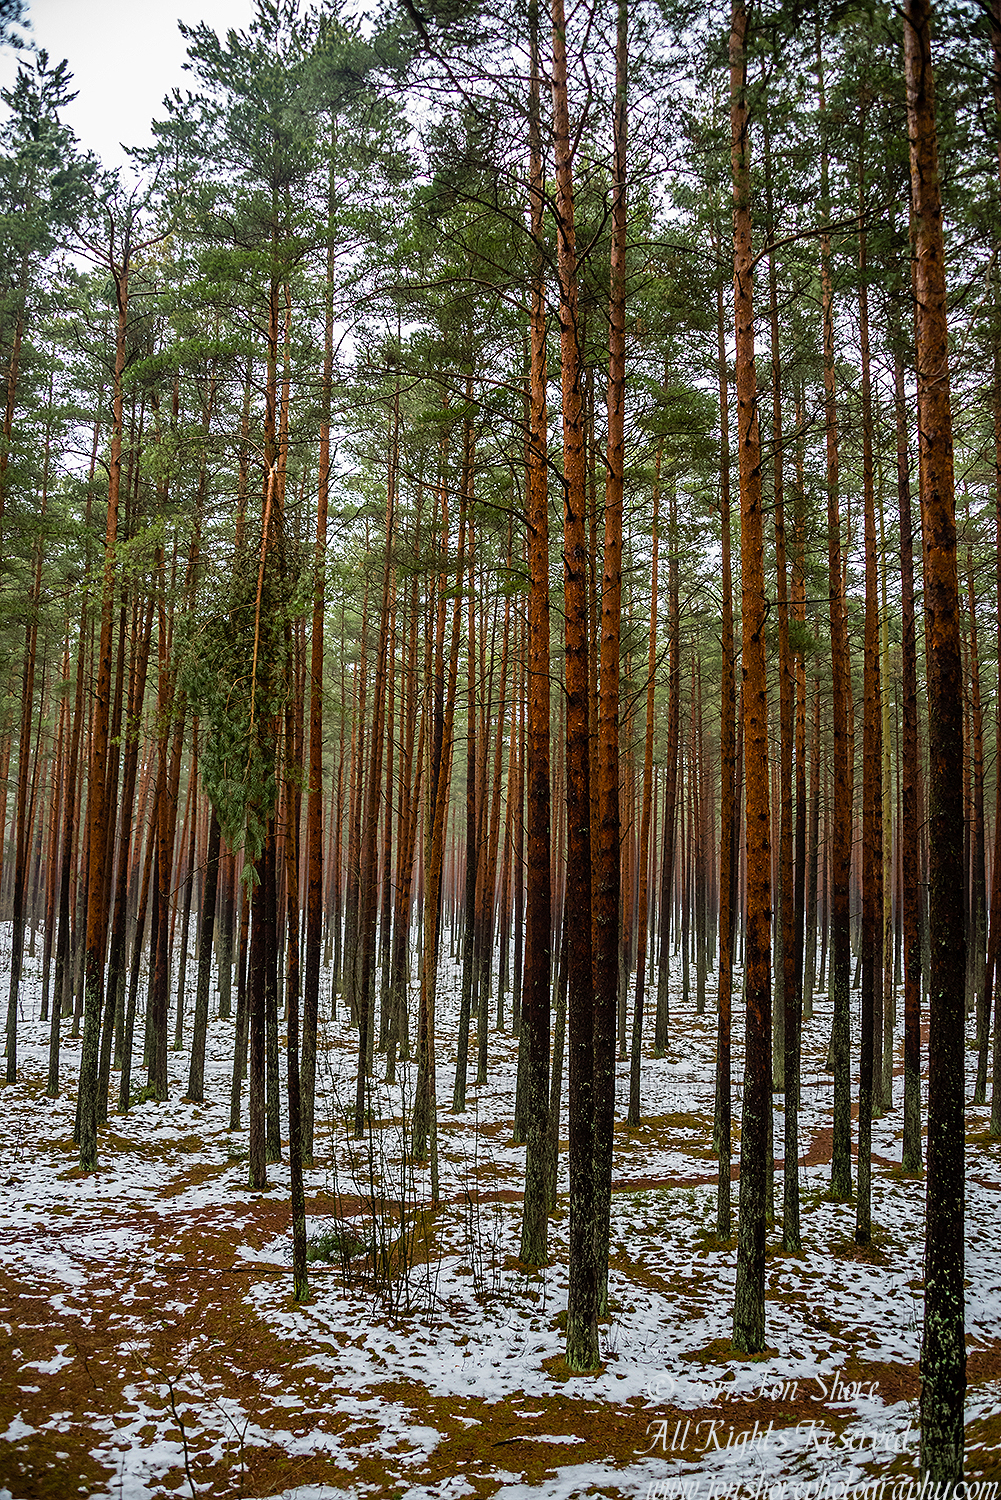 Latvian Forest in Winter. Nikkor 28mm